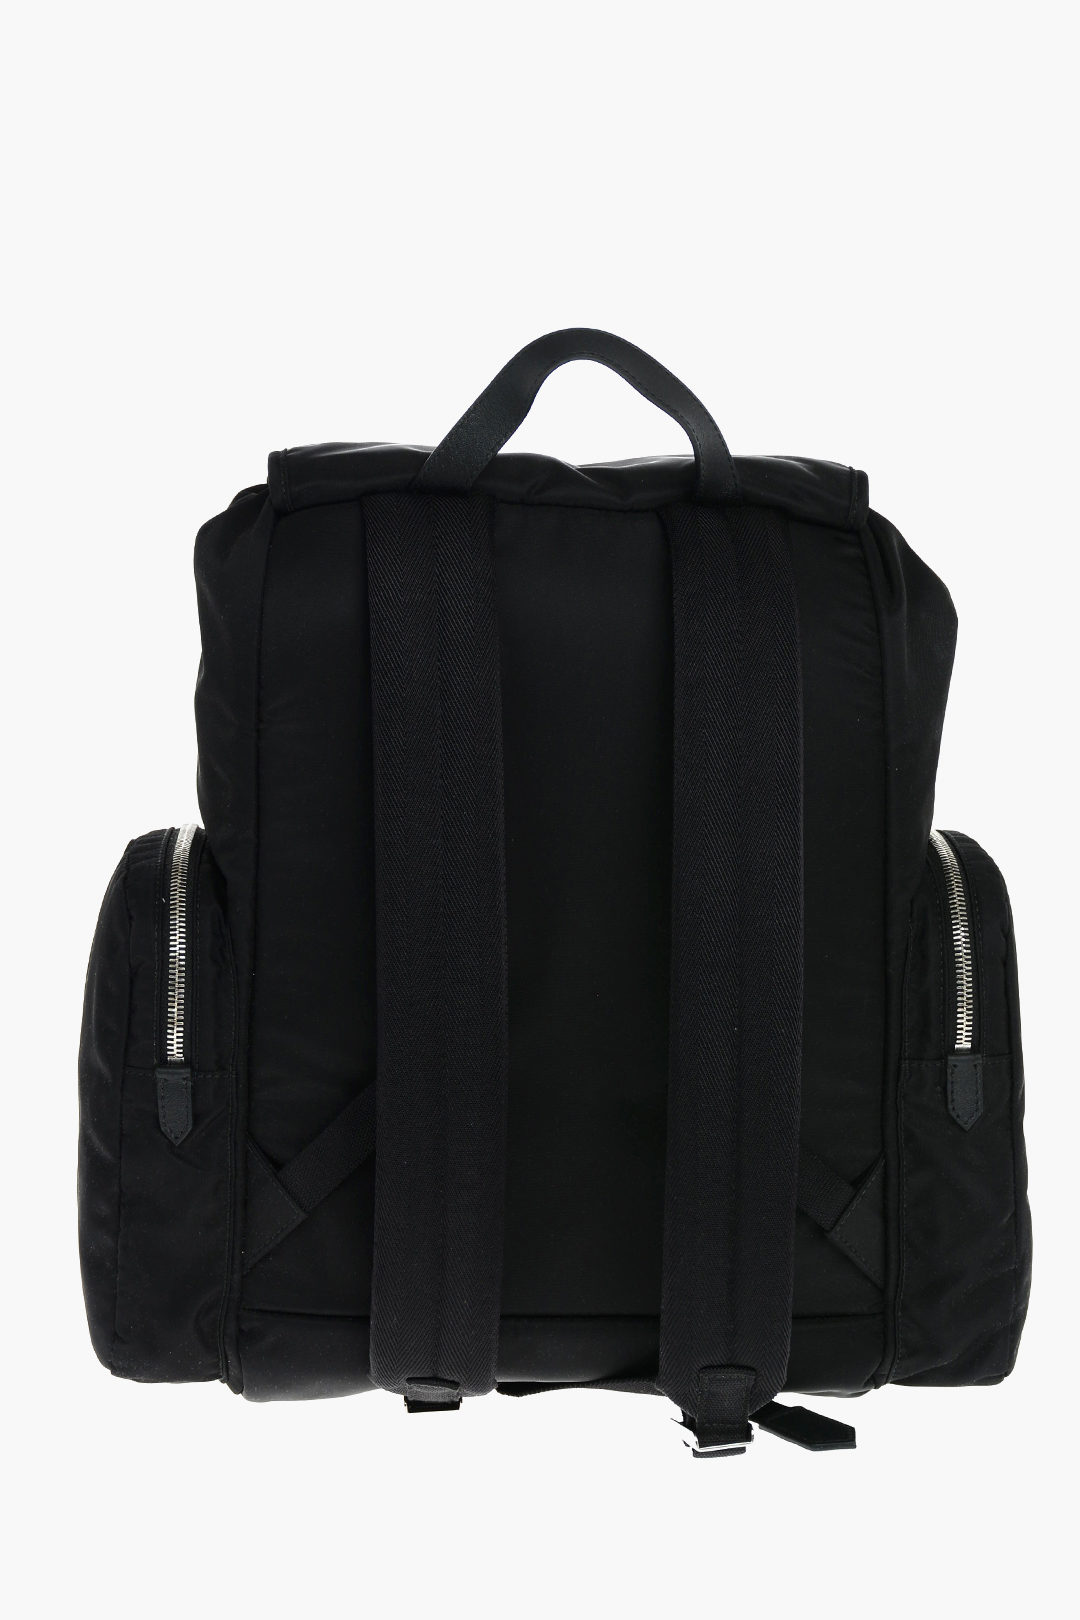 Calvin Klein 205W39NYC Side Pocket Nylon Backpack men - Glamood Outlet